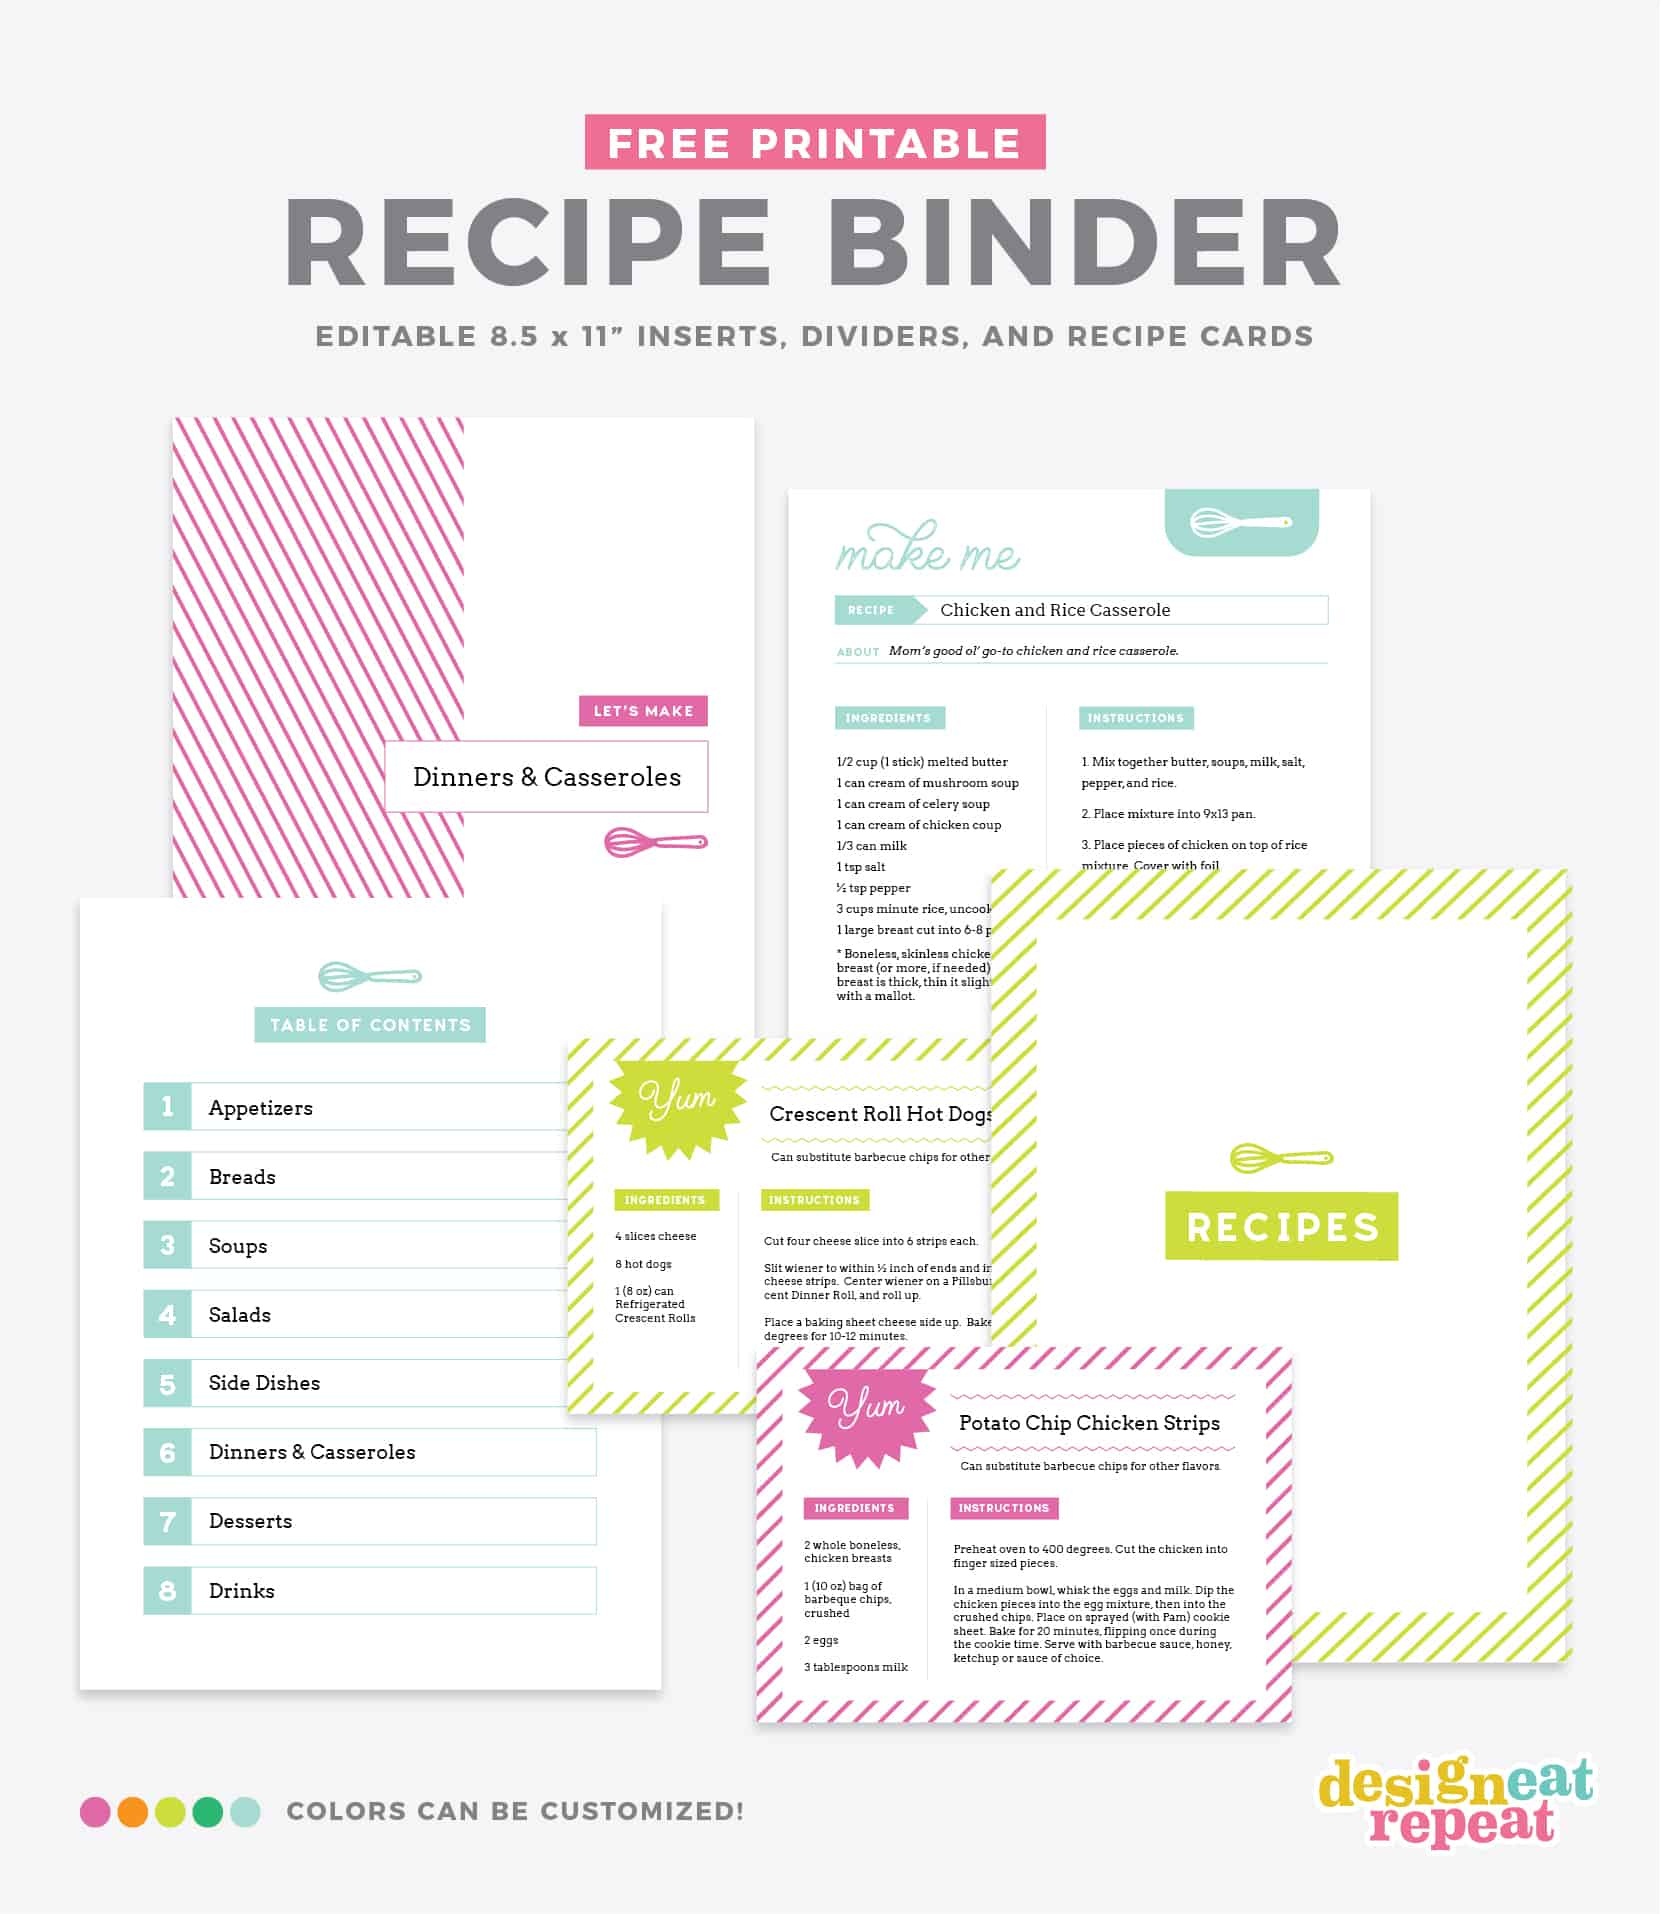 Diy Recipe Book (With Free Printable Recipe Binder Kit!) - Free Printable Recipe Templates